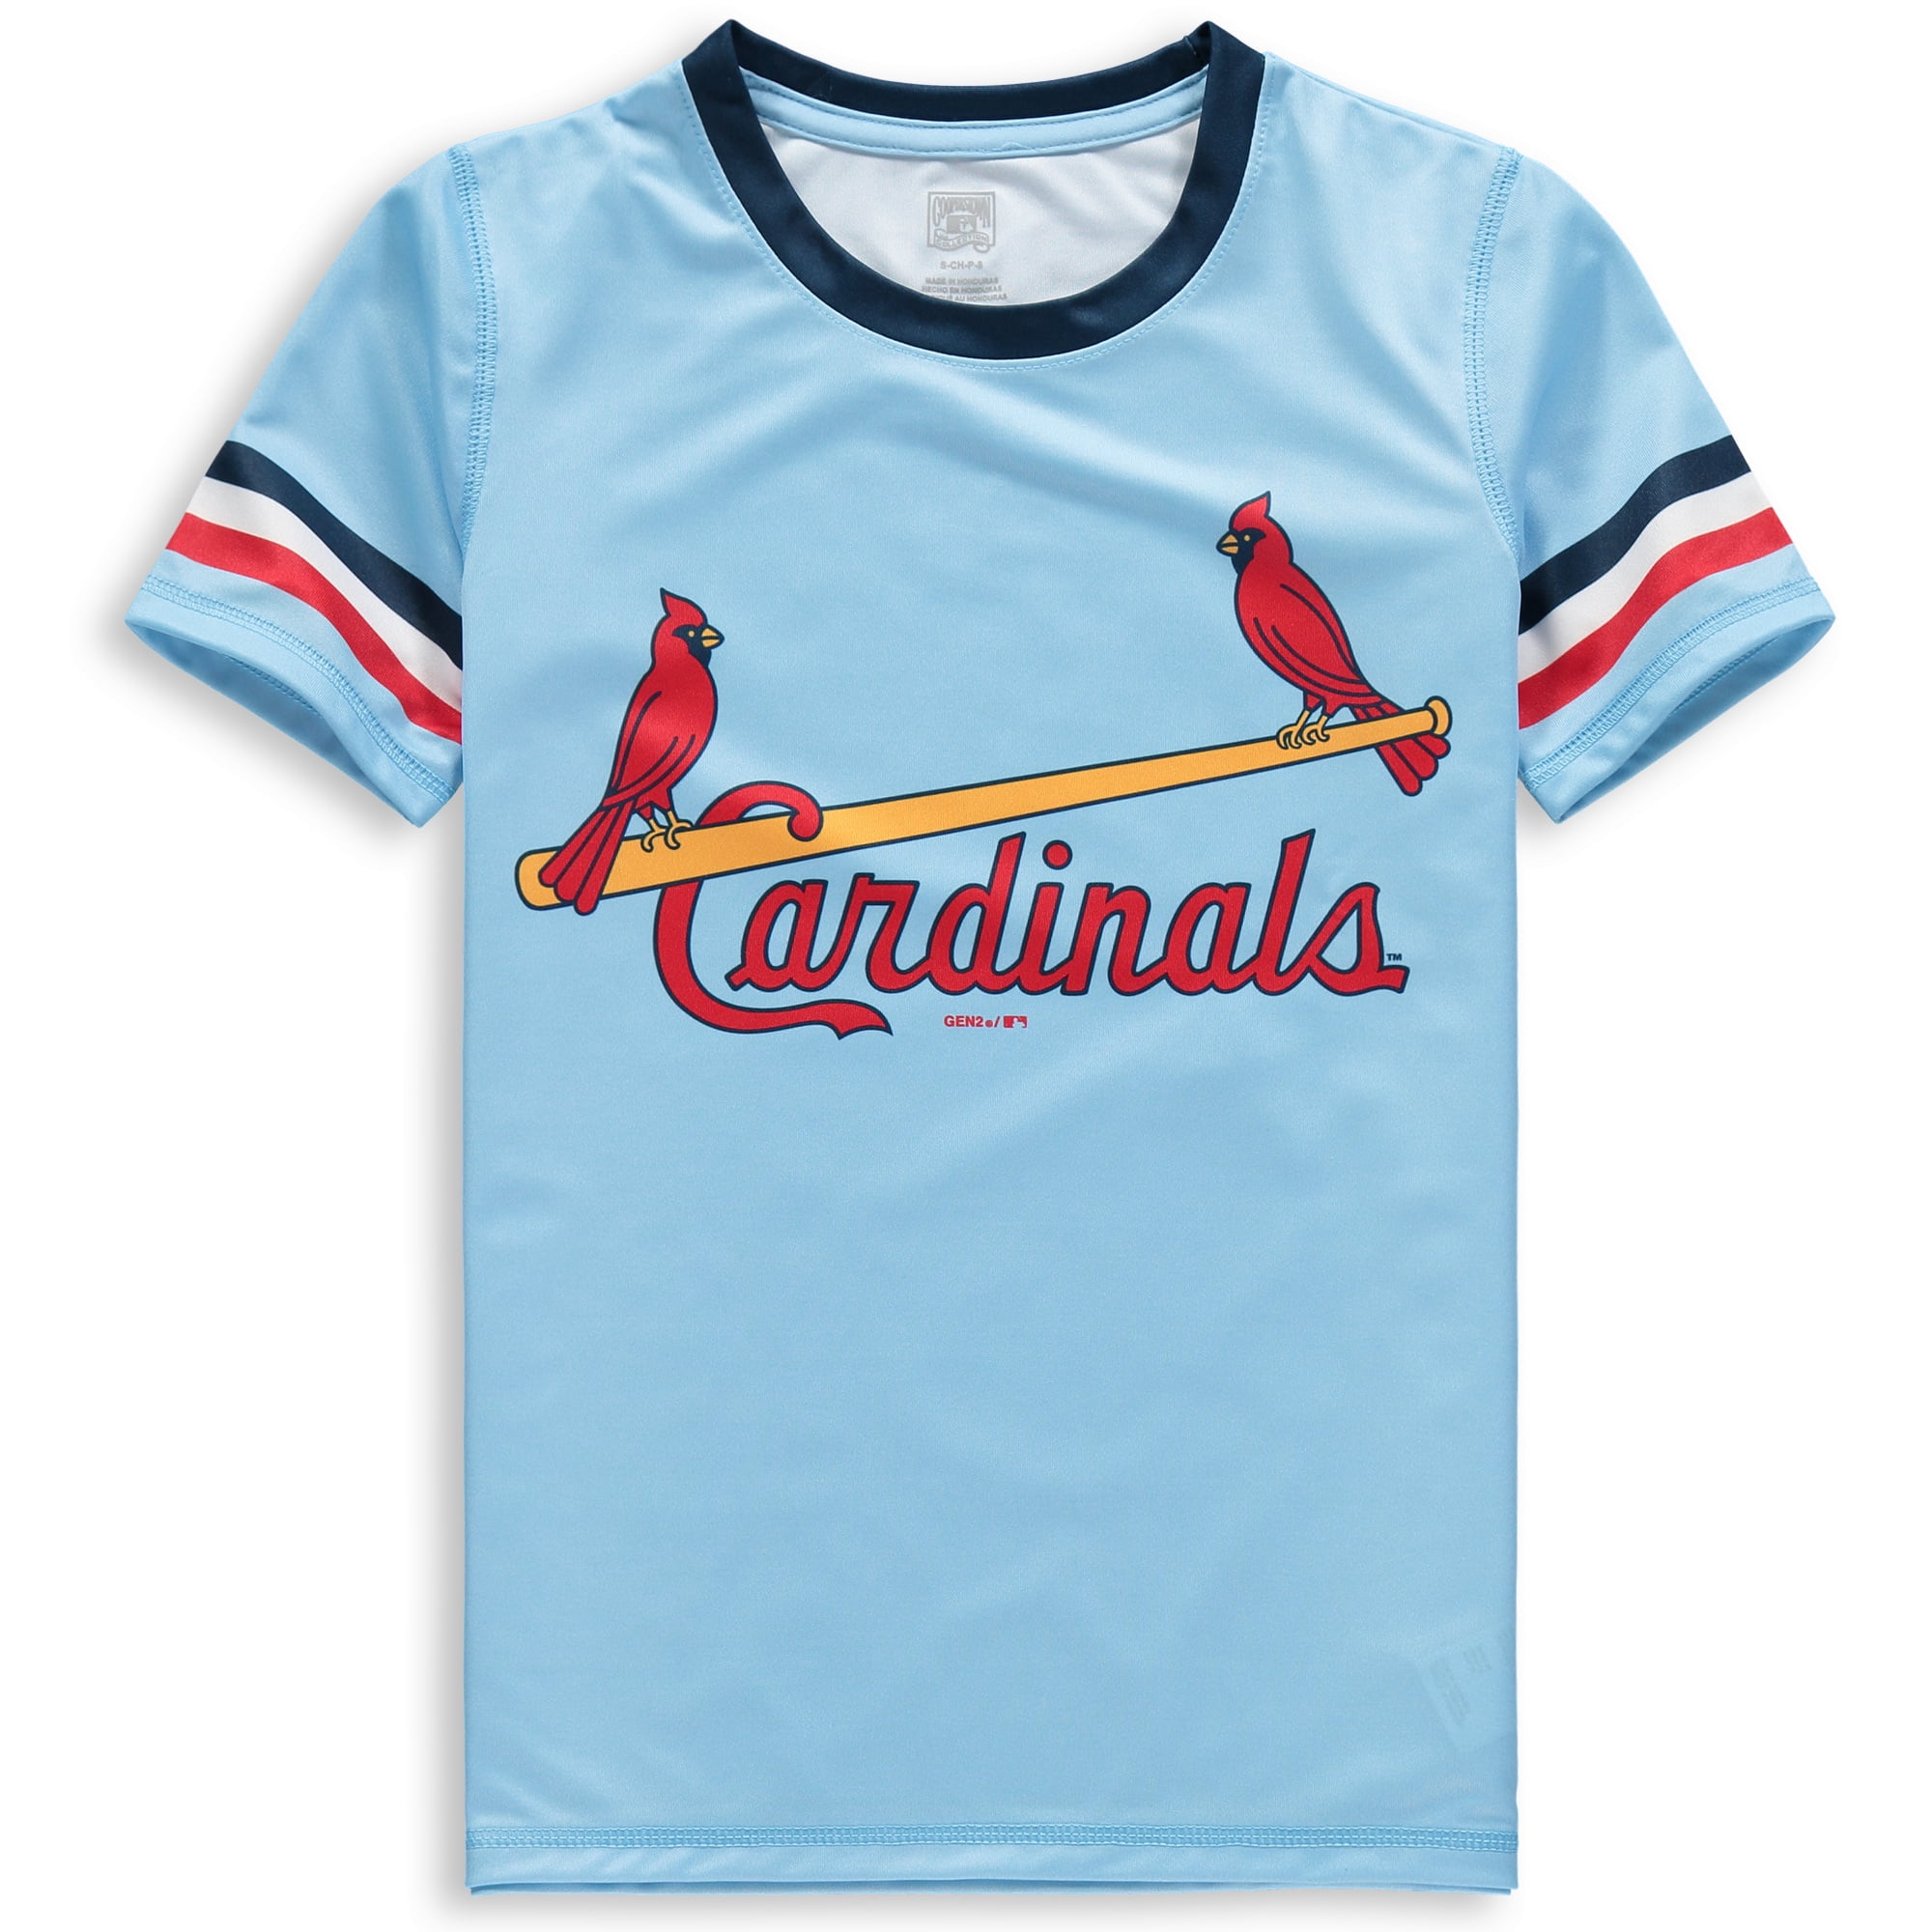 st louis cardinals baby blue jersey